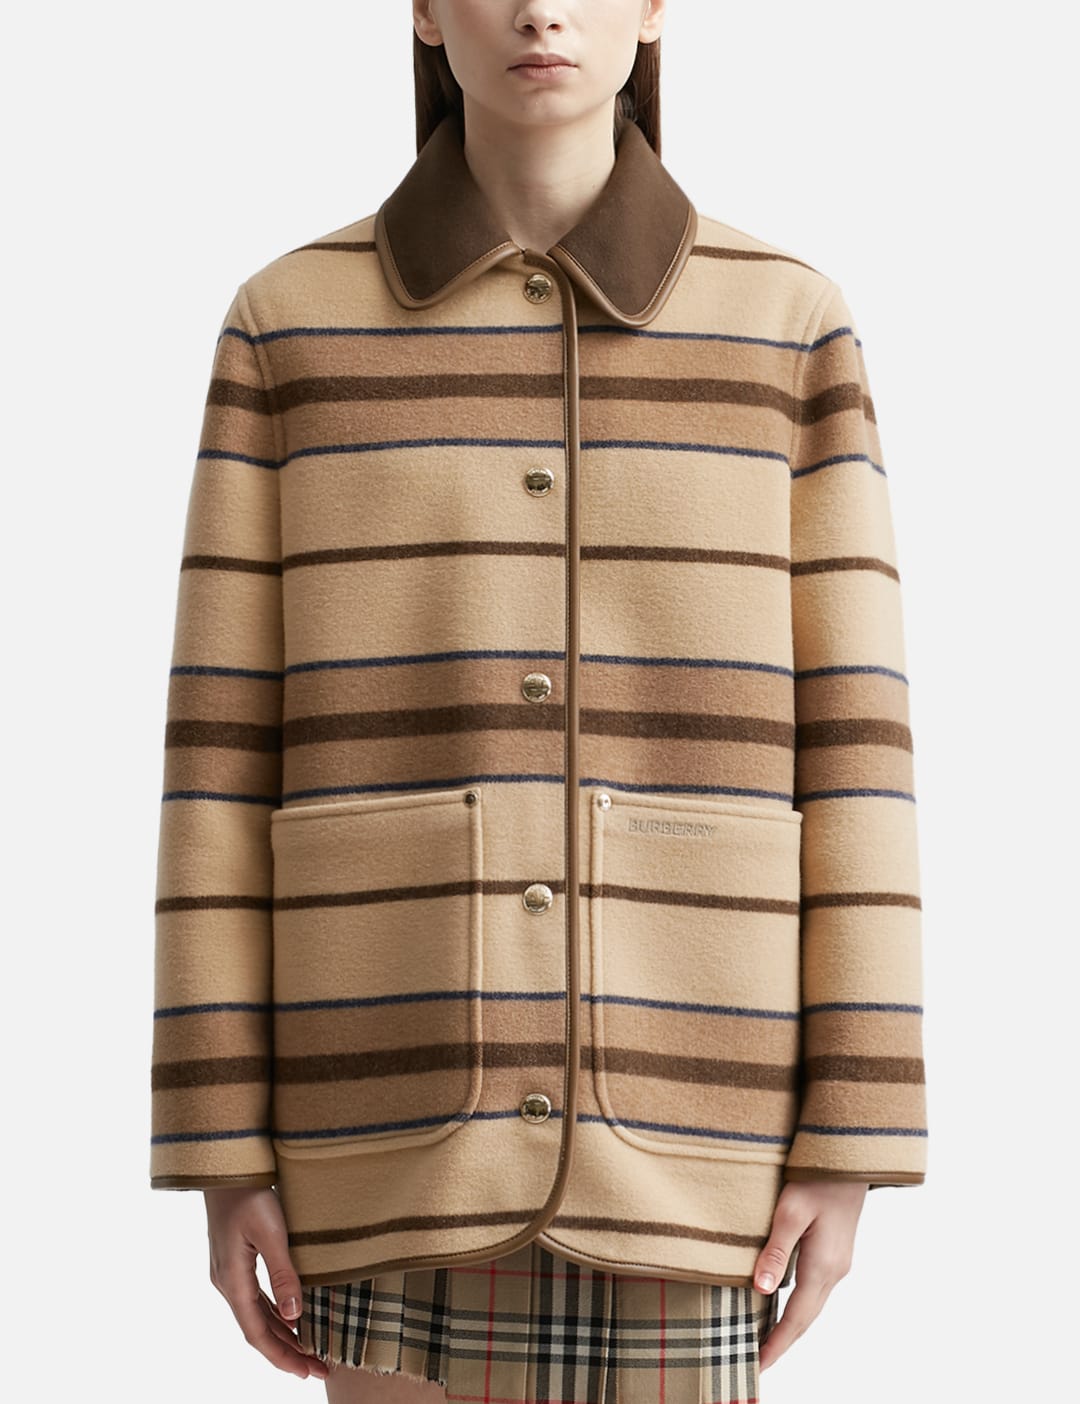 Burberry Striped Wool Jacket